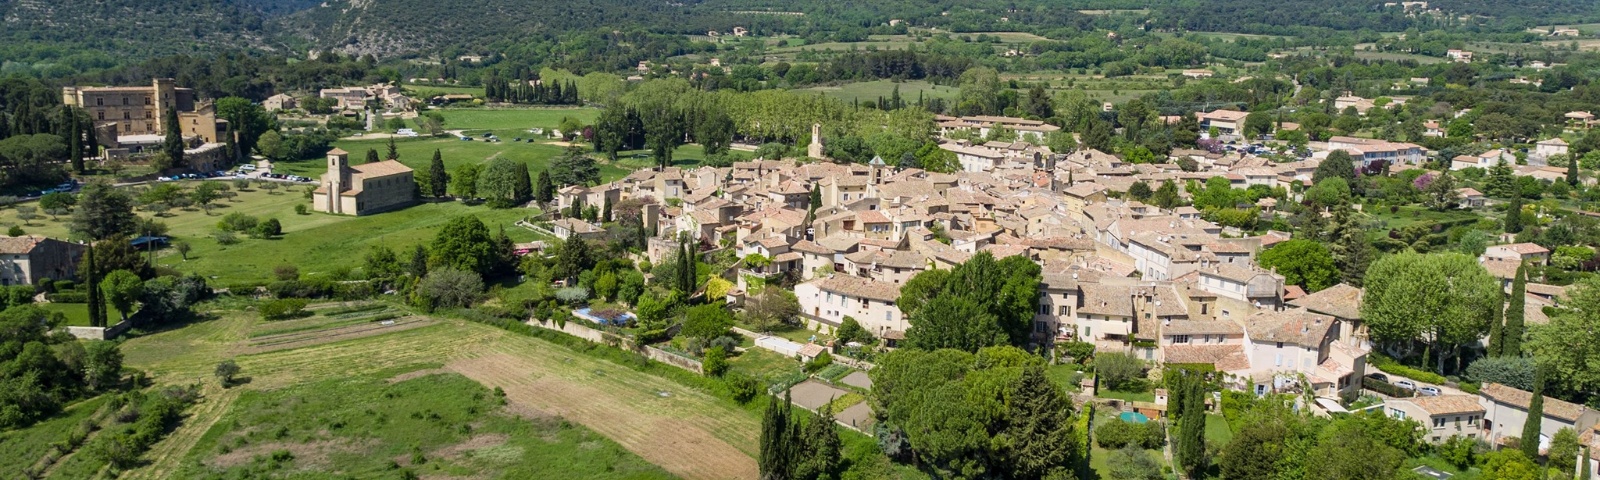 Village de Lourmarin